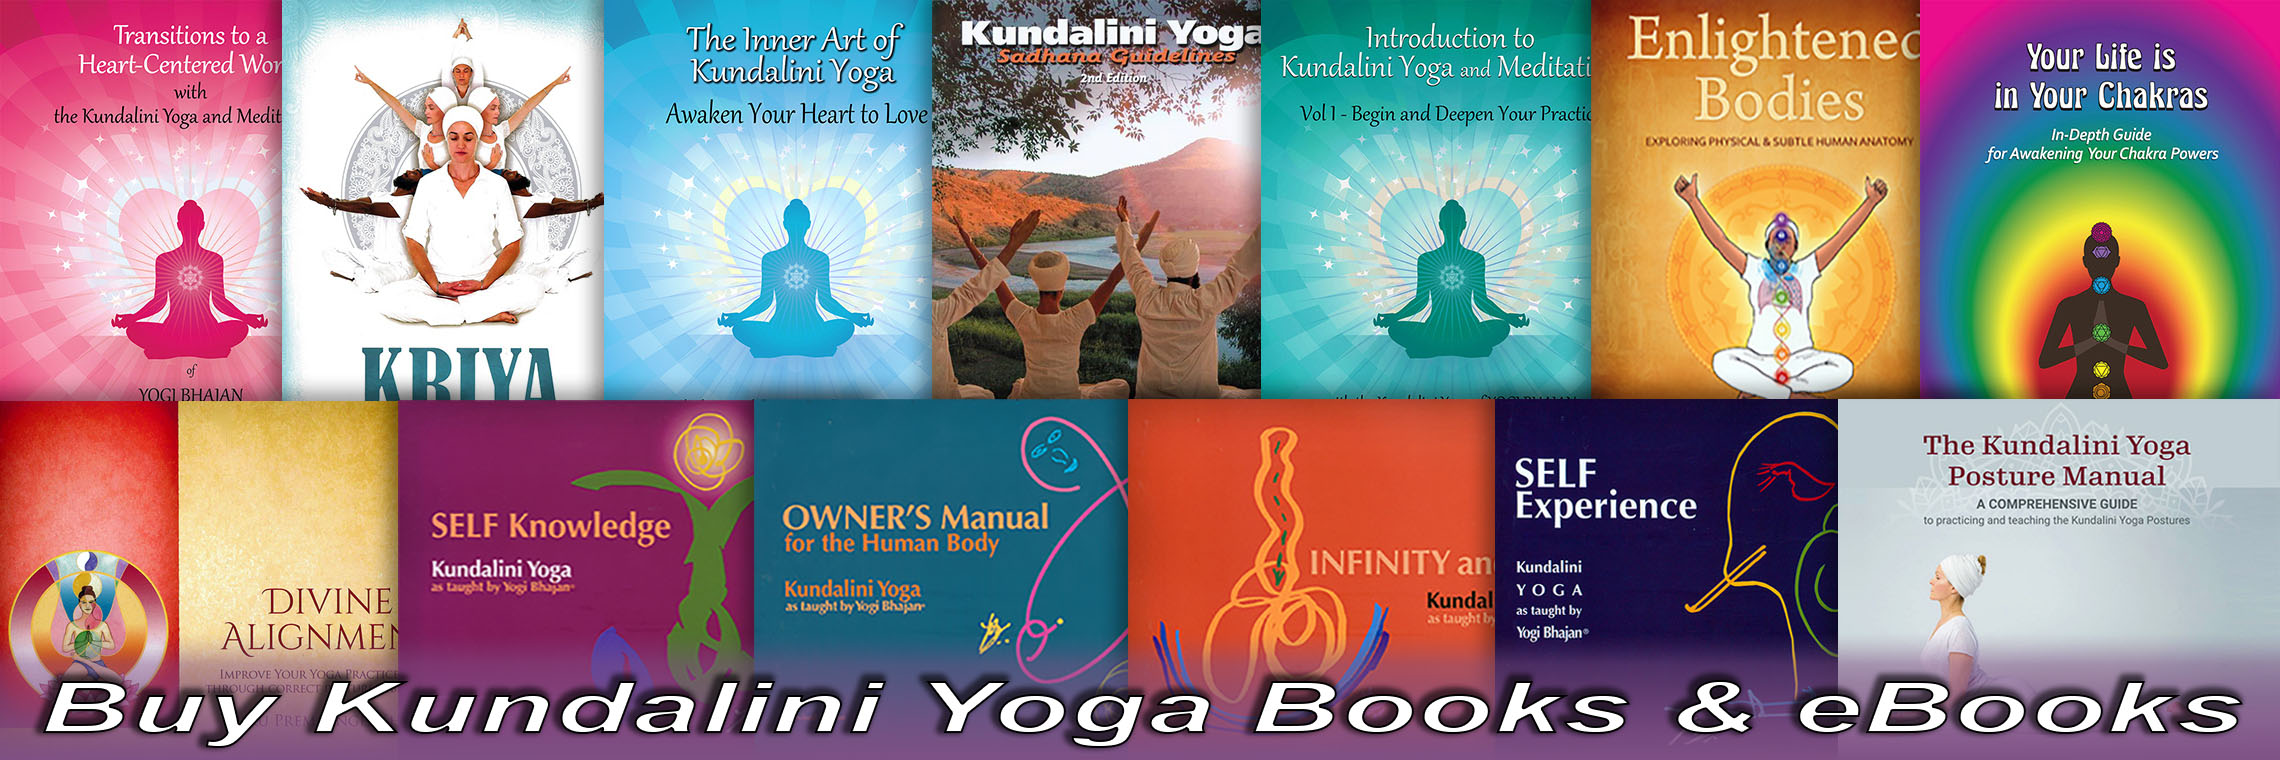 Buy Kundalini Yoga Books & eBooks